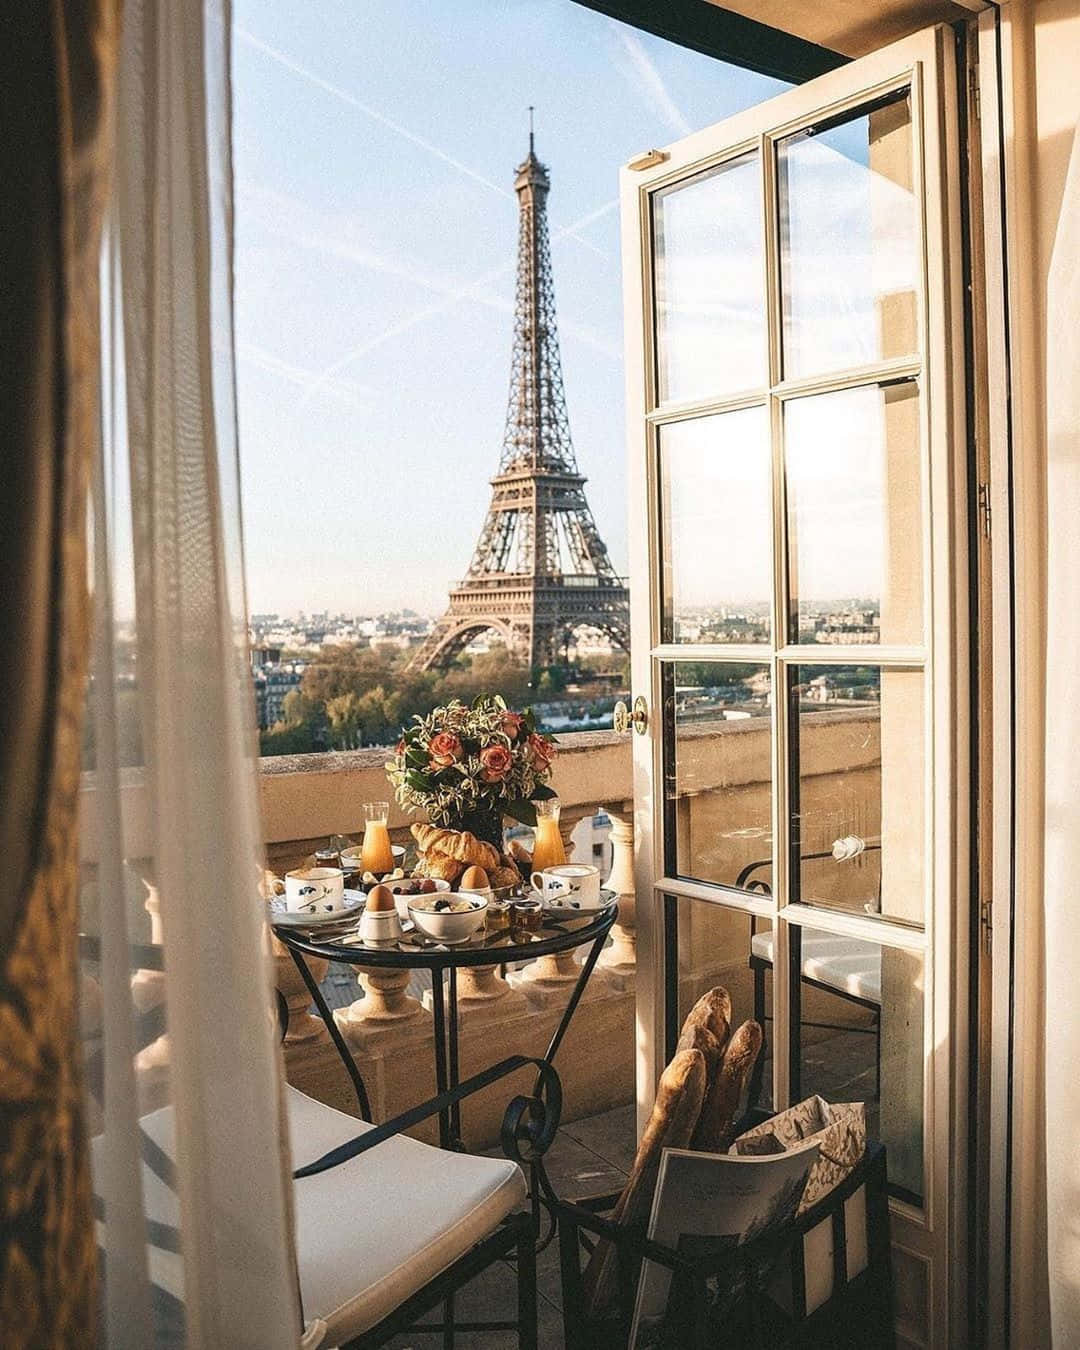 Imagende La Torre Eiffel Francesa Vista Desde La Ventana.